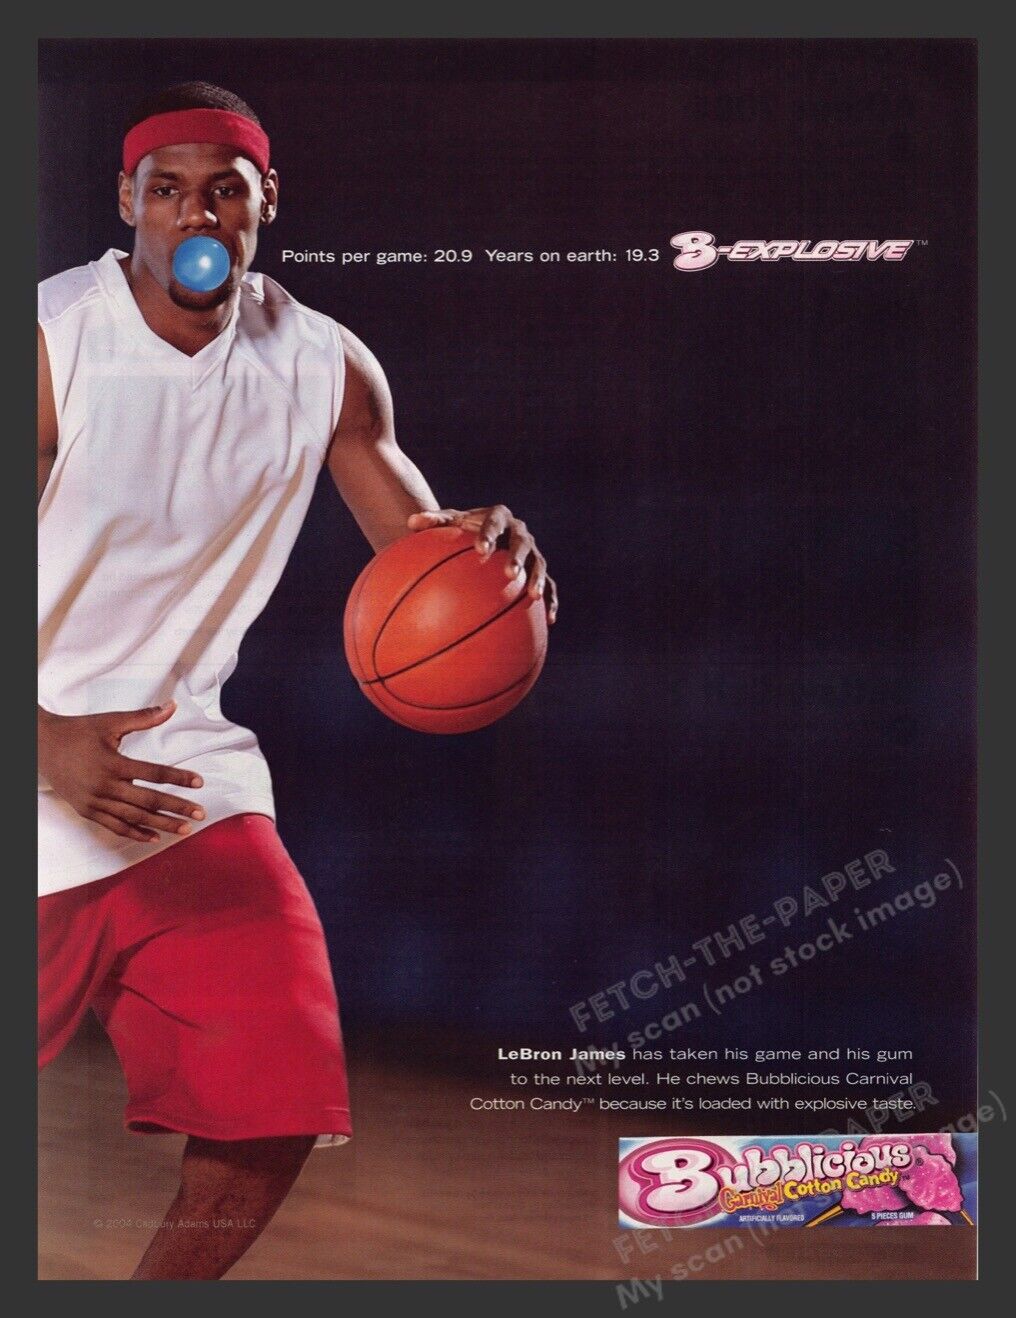 Bubblicious Carnival Cotton Candy Gum LeBron James 2000s Print Ad 2004